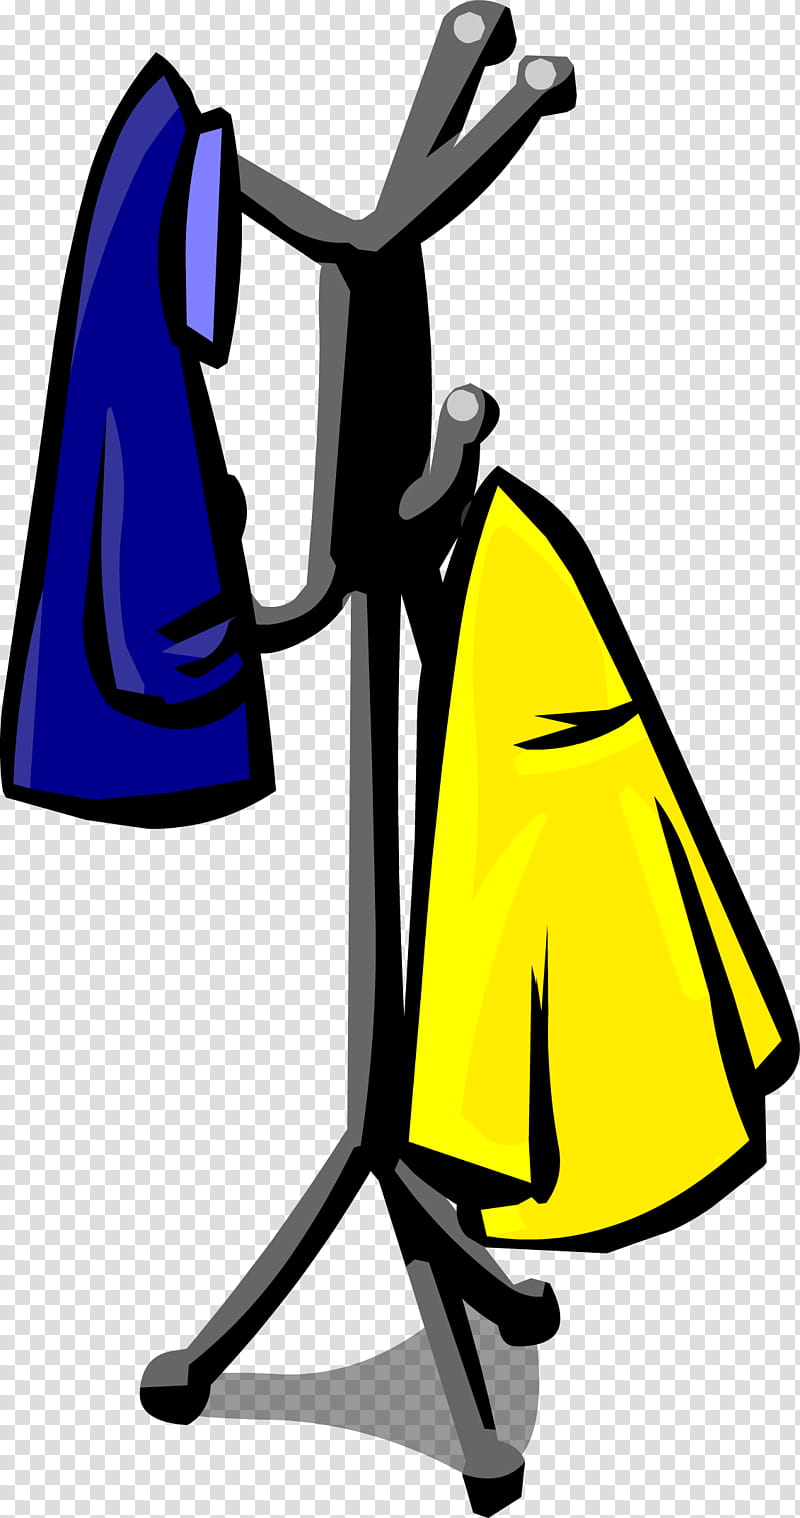 Hat, Clothes Hanger, Coat, Coat Hat Racks, Clothing, Jacket, Sweater, Yellow transparent background PNG clipart